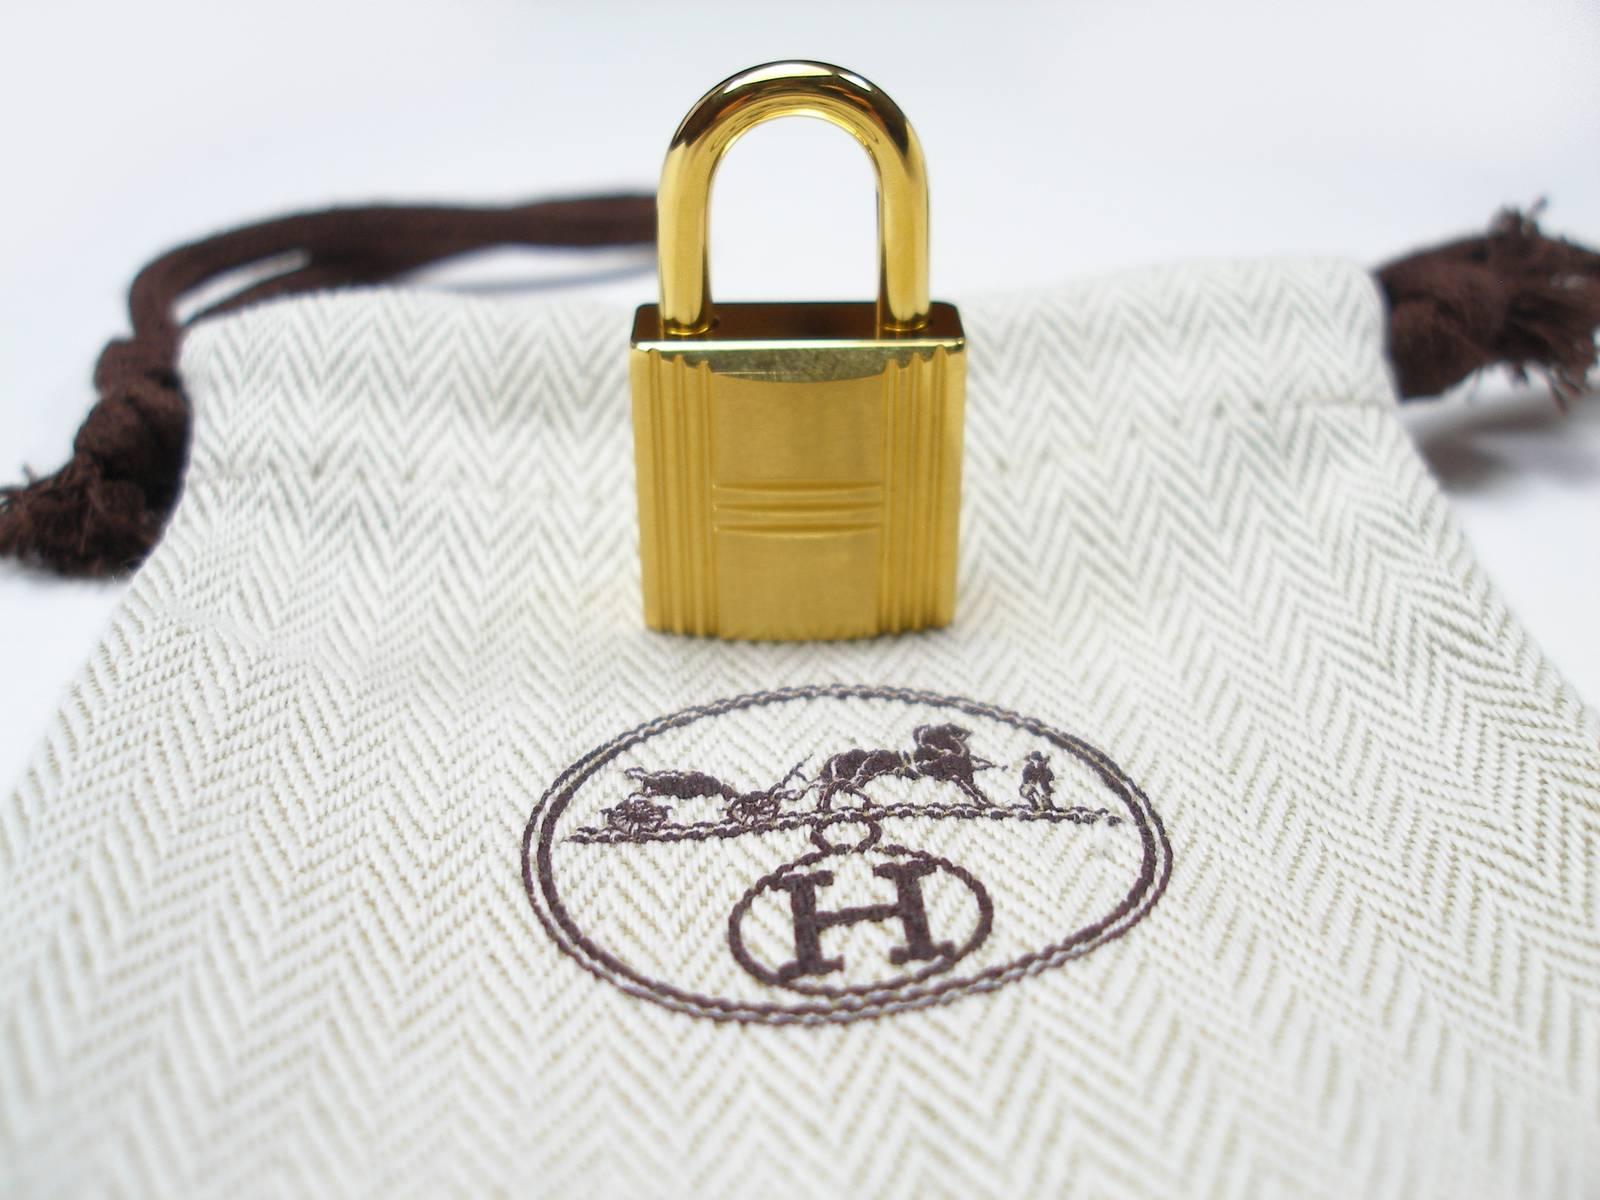 Hermès Cadenas Lock 2 Keys For Birkin or Kelly bag Gold plated shiny and brushed 3